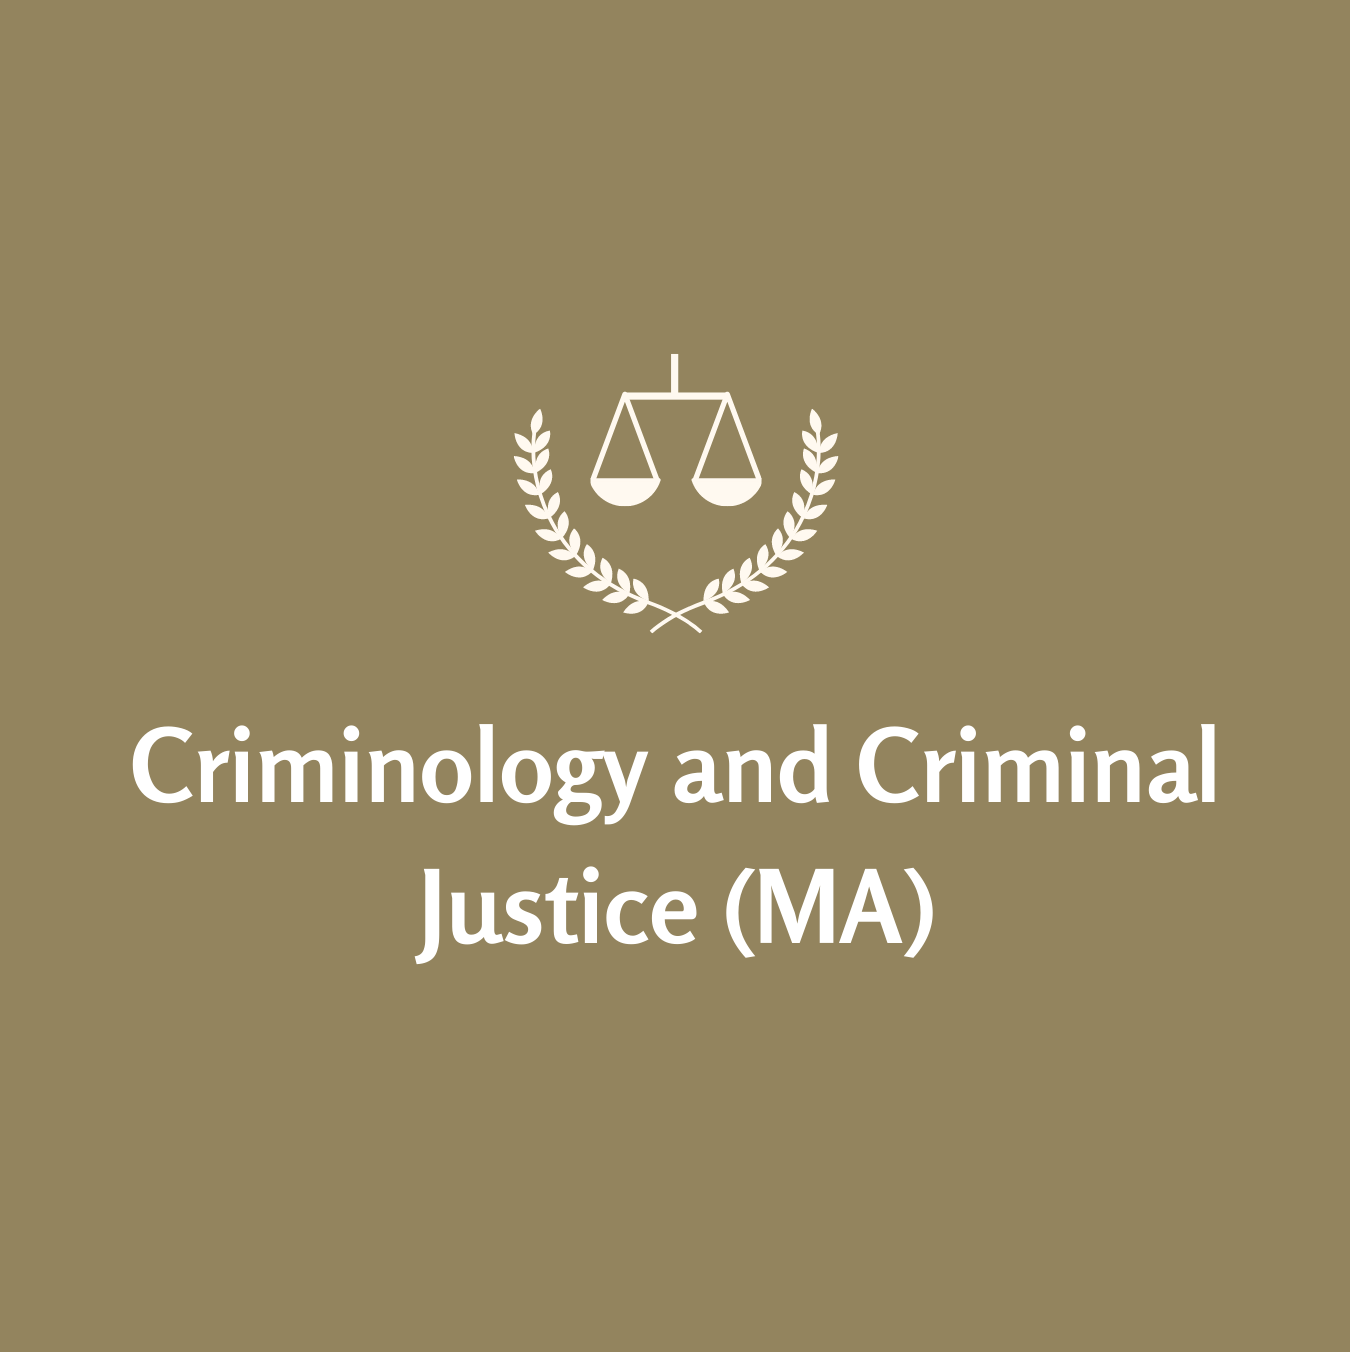 MA in Criminology